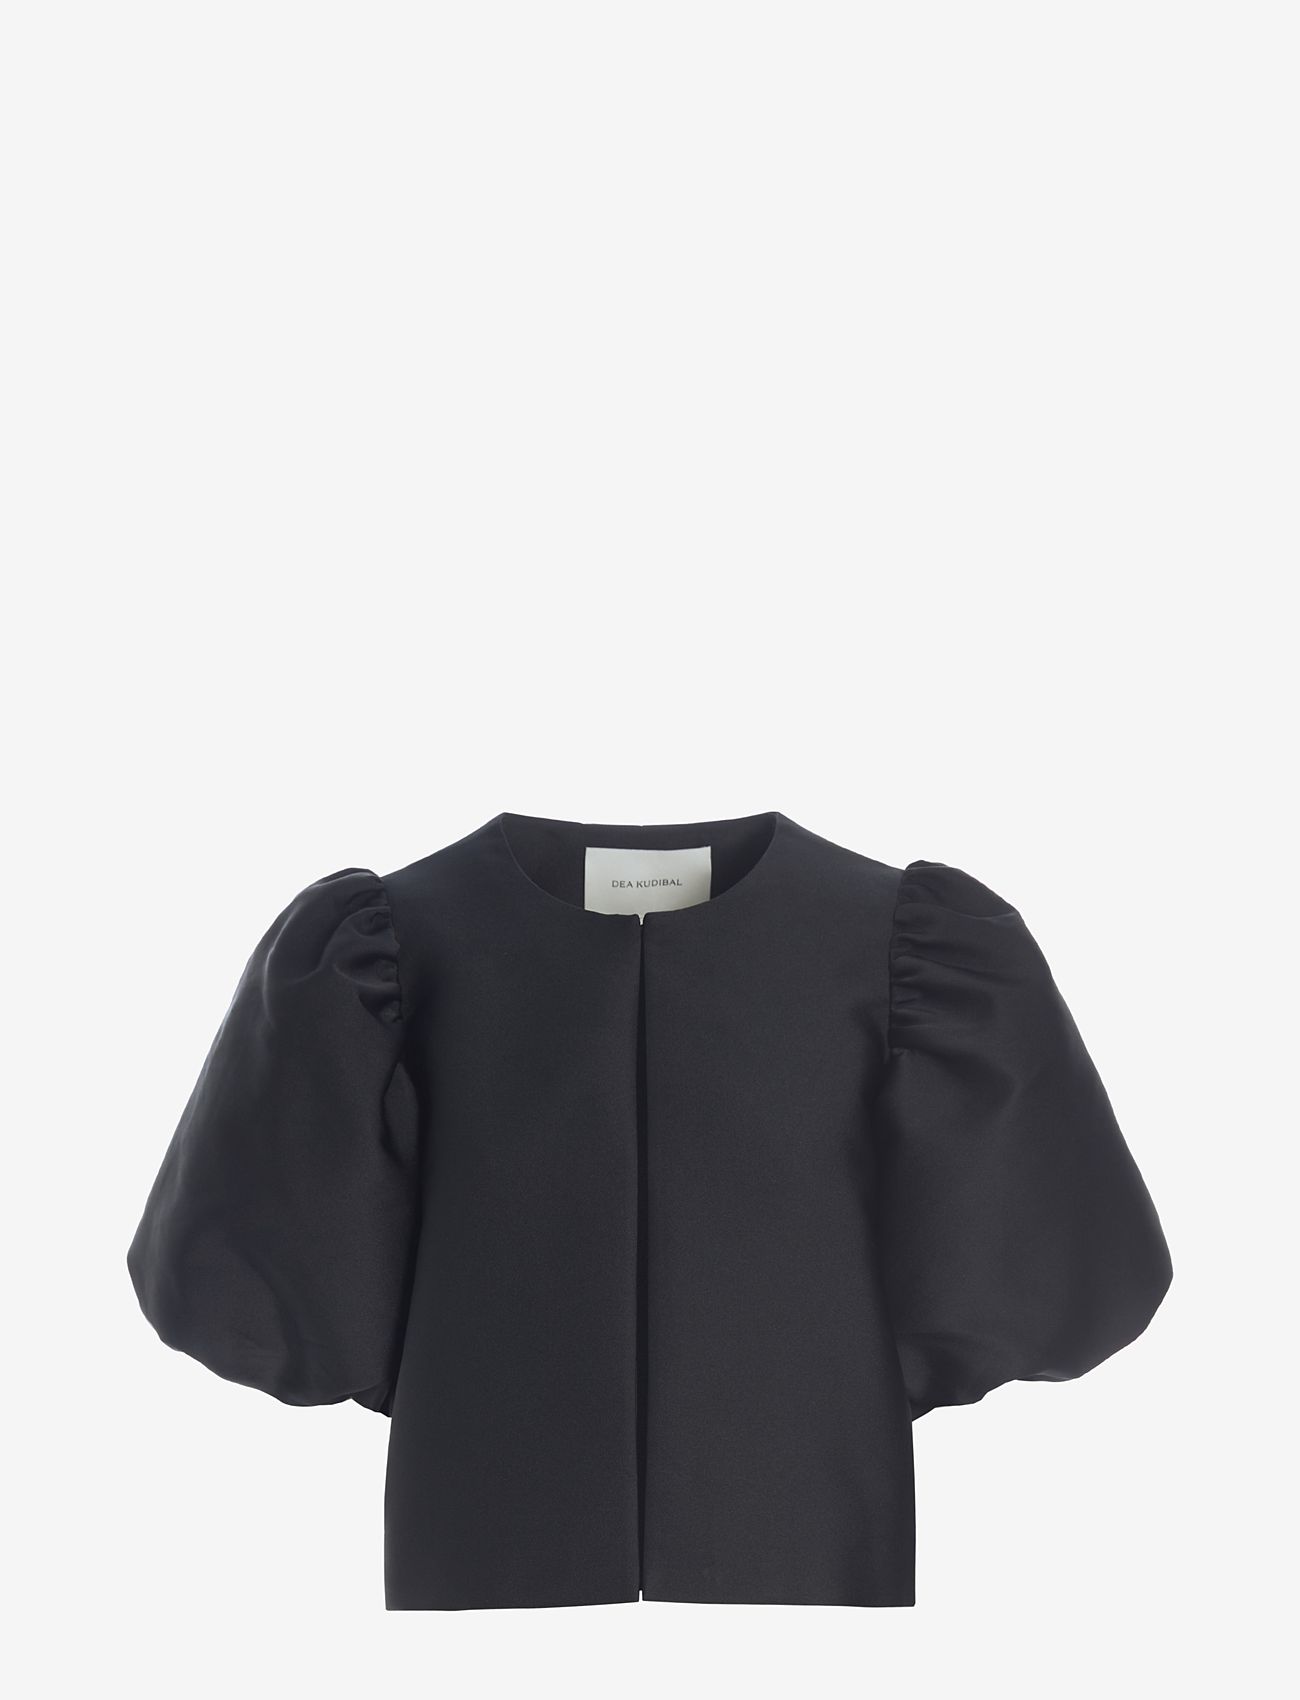 Dea Kudibal - OPERINA - ballīšu apģērbs par outlet cenām - black - 0